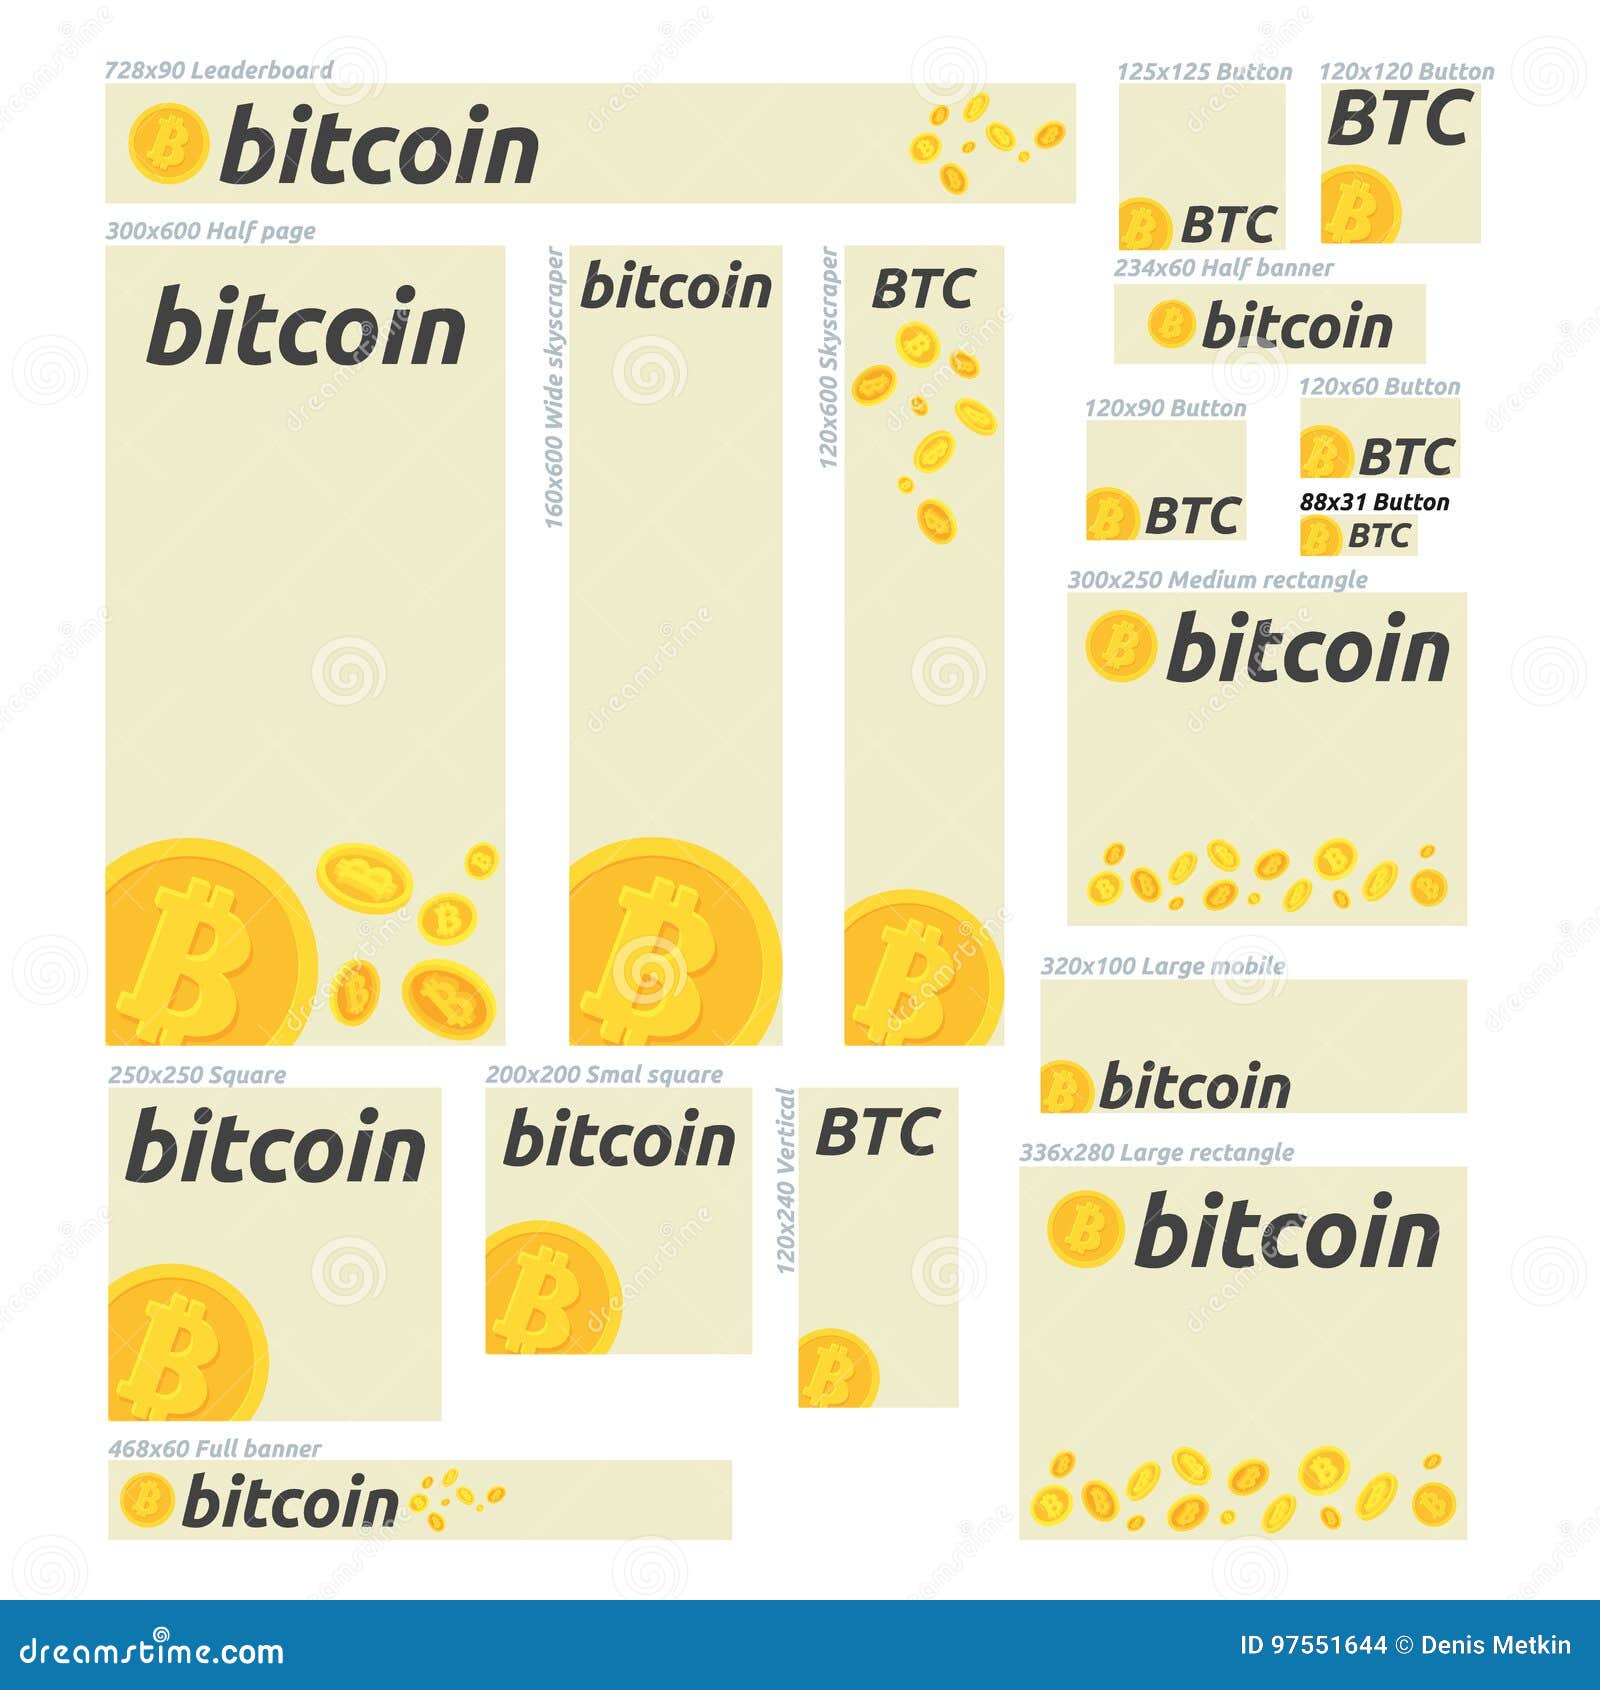 Bitcoin vs US Dollar